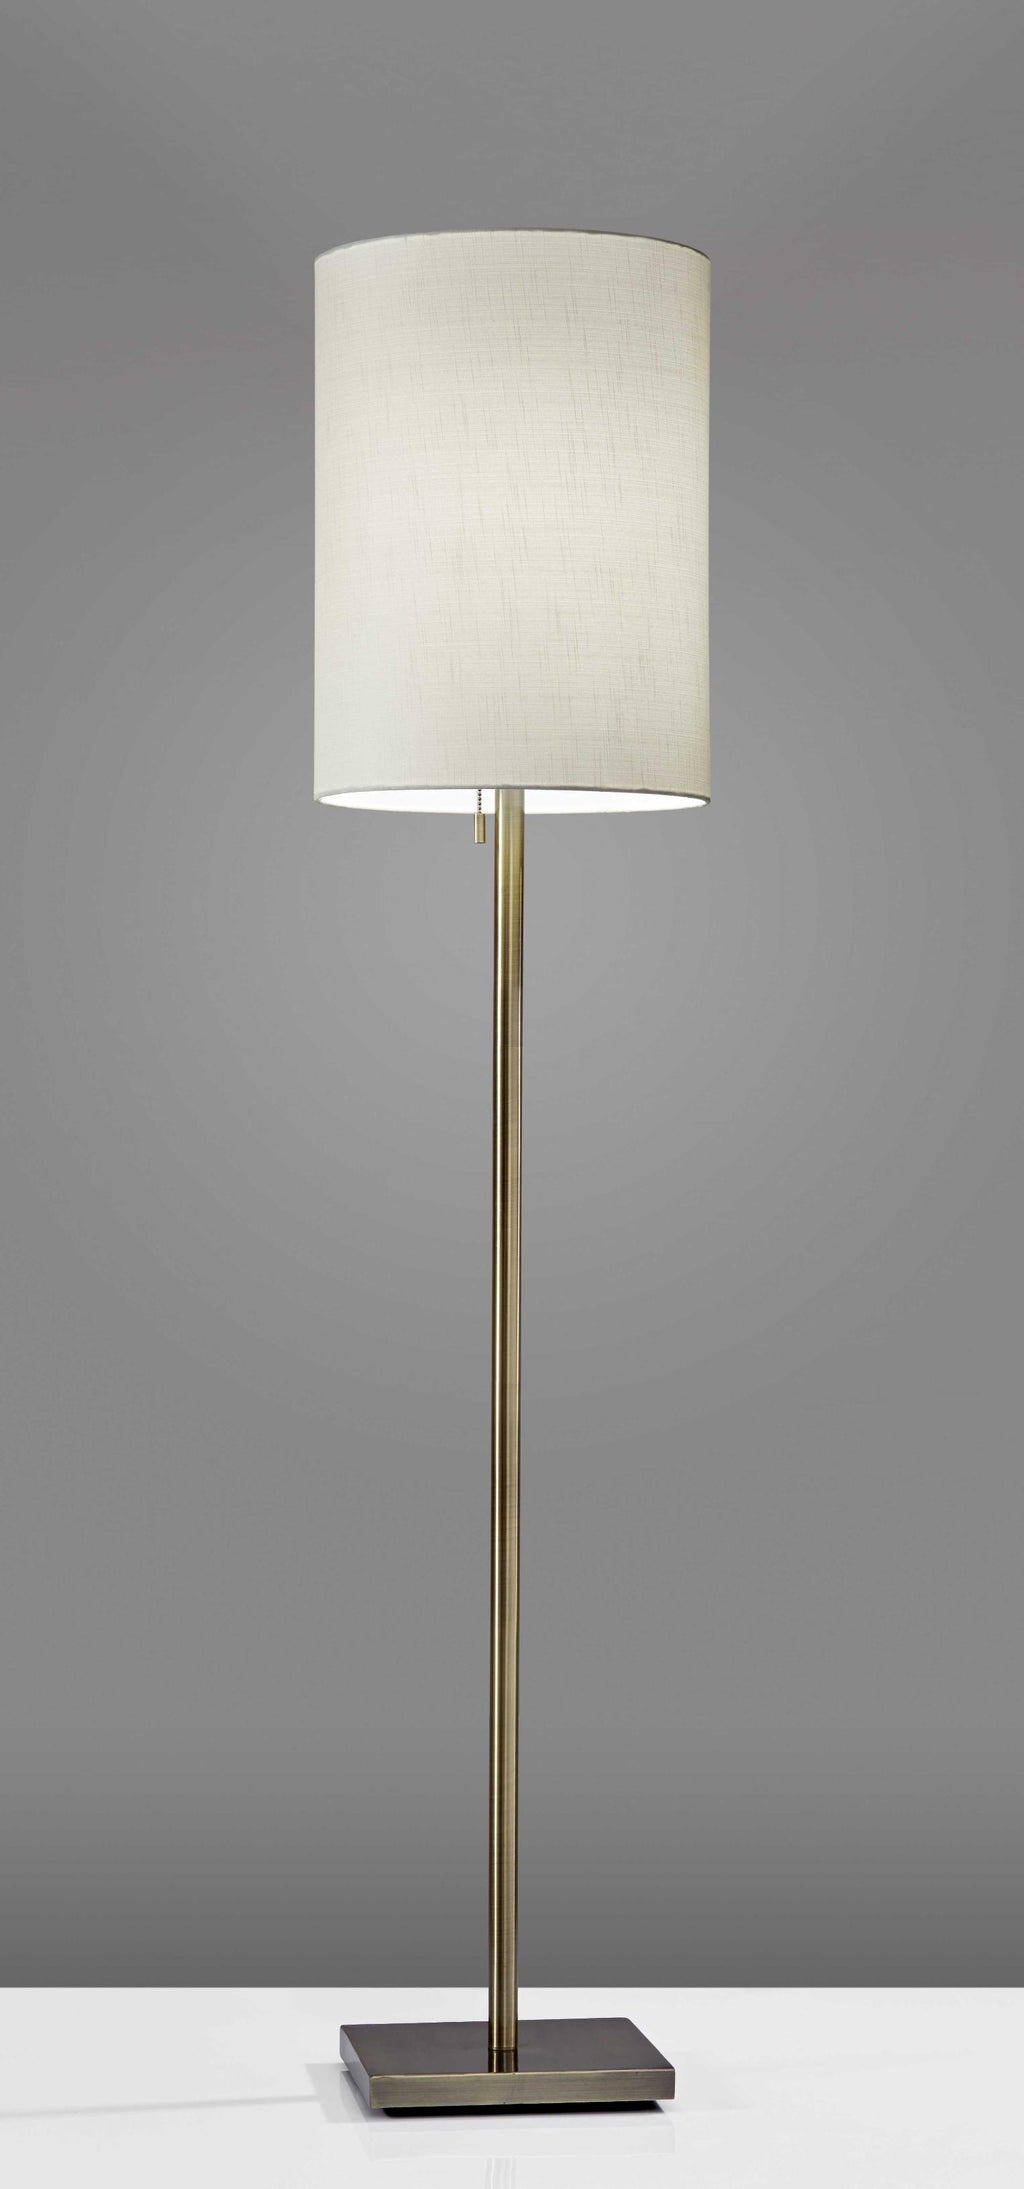 Floor Lamp Classic Silhouette Brass Metal